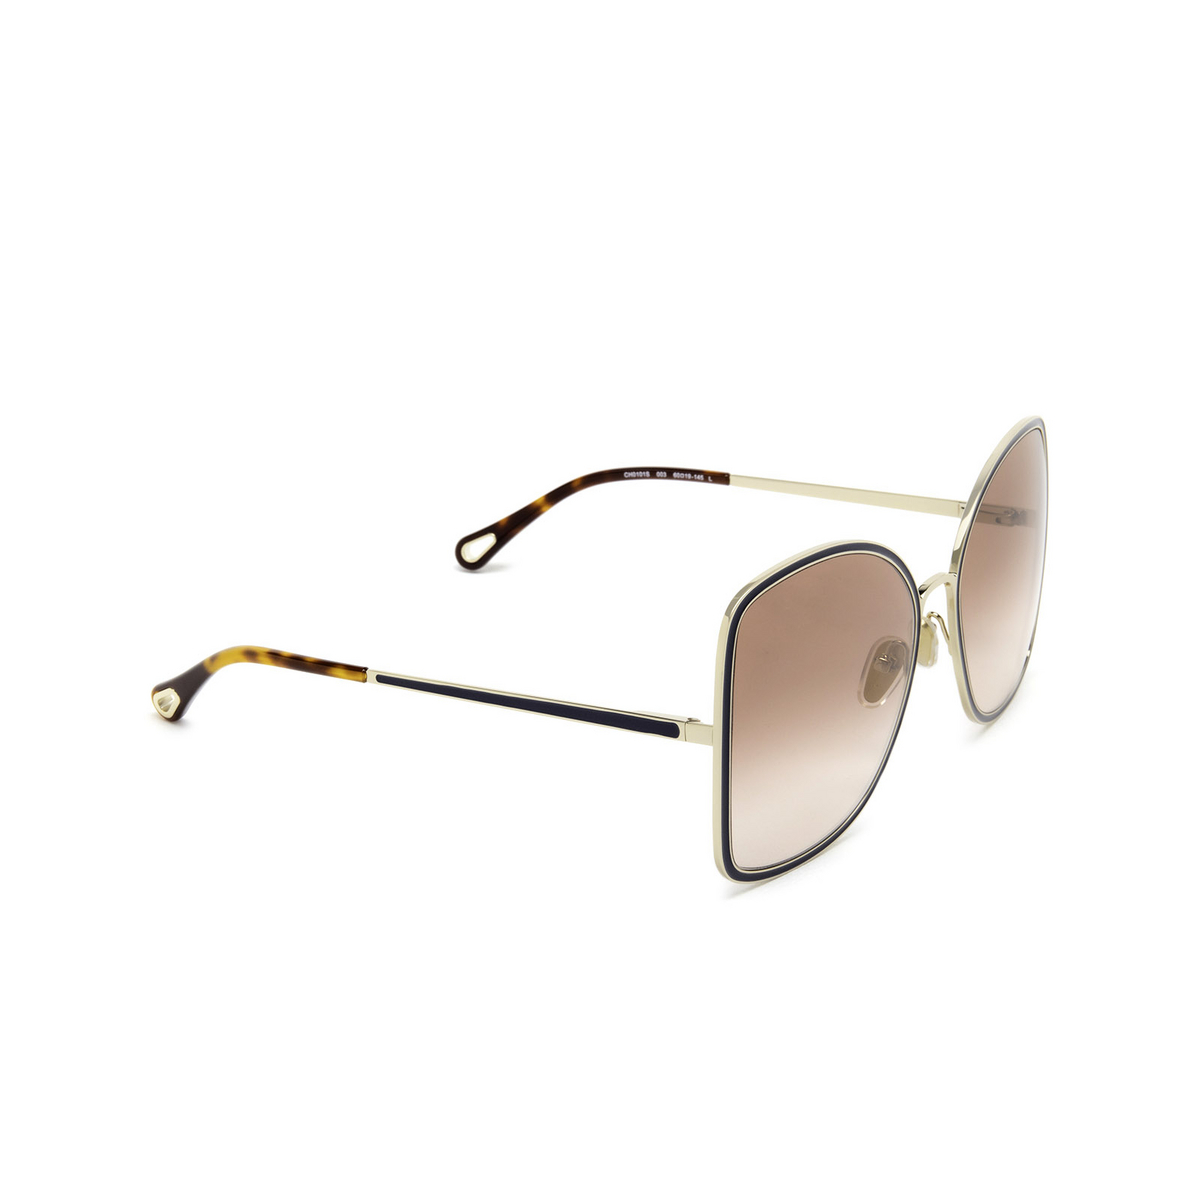 Chloé® Square Sunglasses: CH0101S color Gold & Blue 003 - three-quarters view.